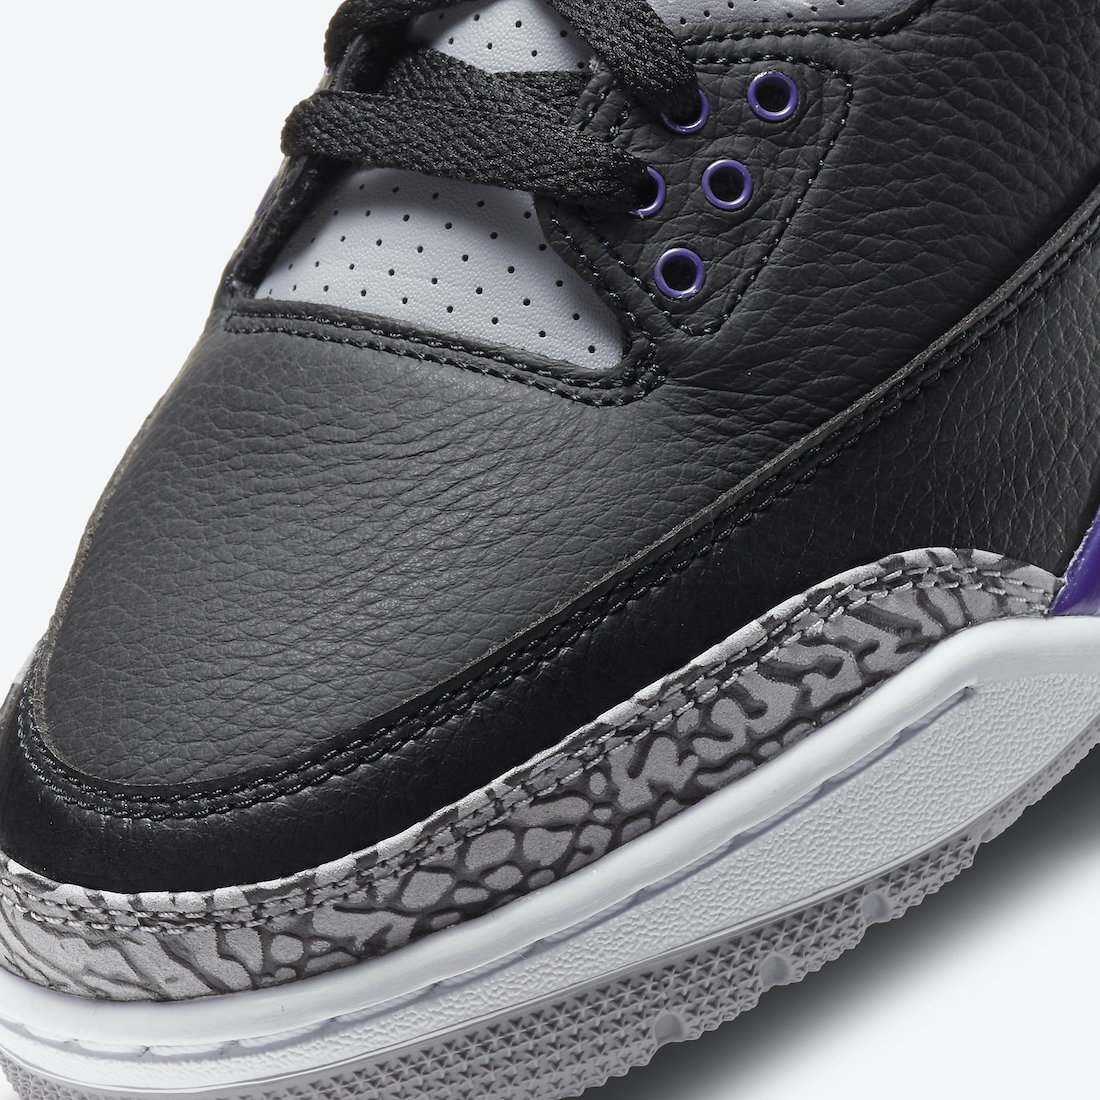 Air Jordan 3 Black Court Purple CT8532-050 Release Date